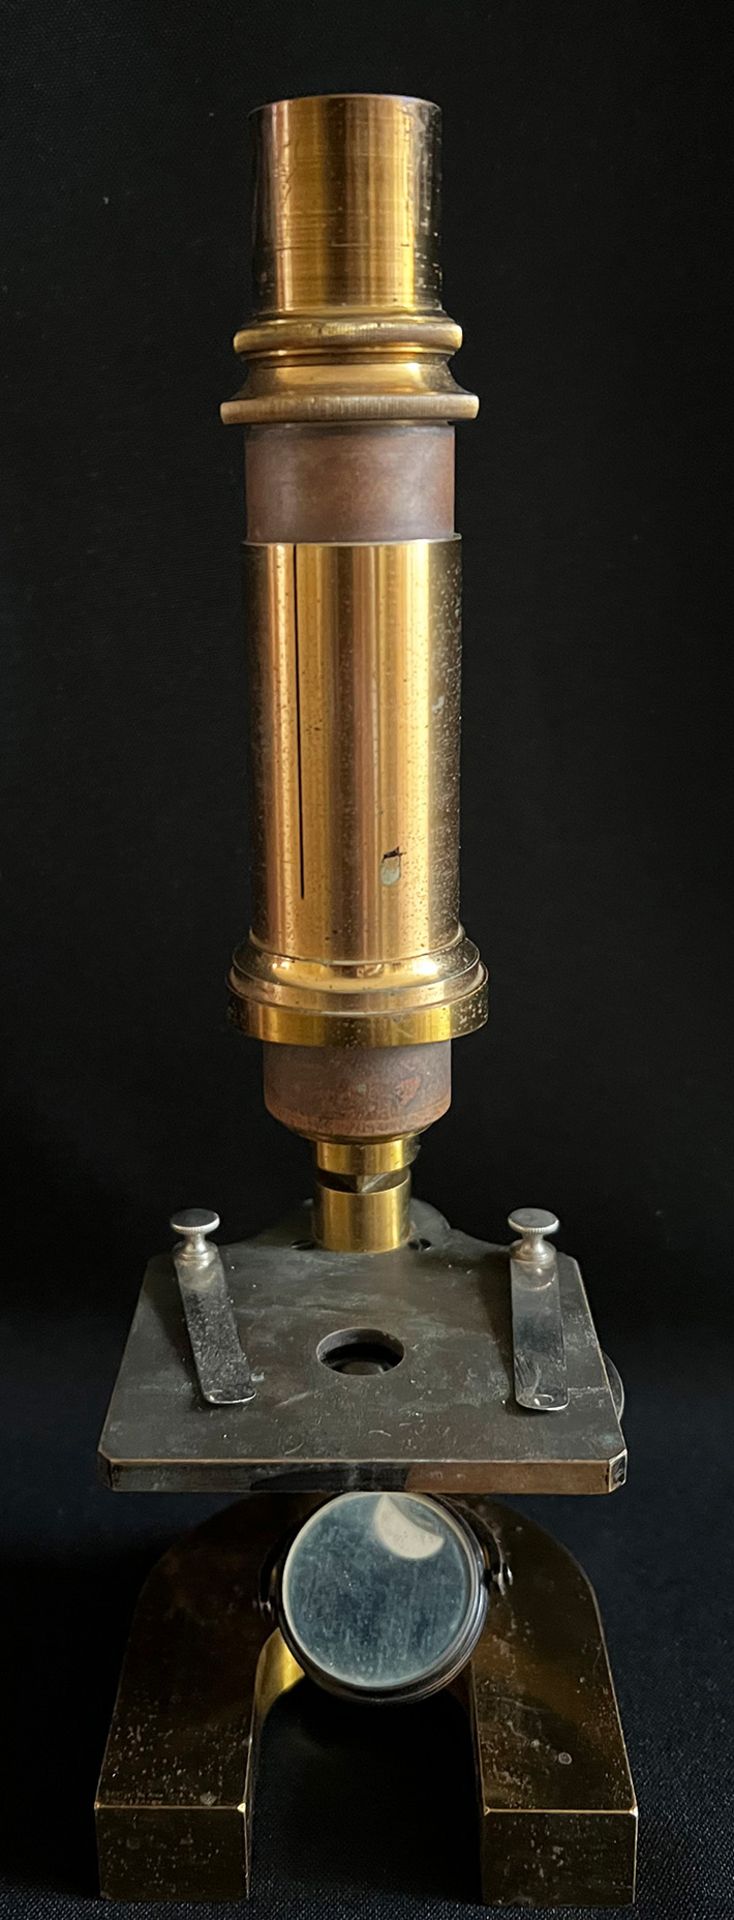 Messing-Mikroskop "E. Leitz, Wetzlar" im Holzkasten, um 1900. Signiert auf Hufeisenfuß, Serien-Nr. - Image 5 of 11